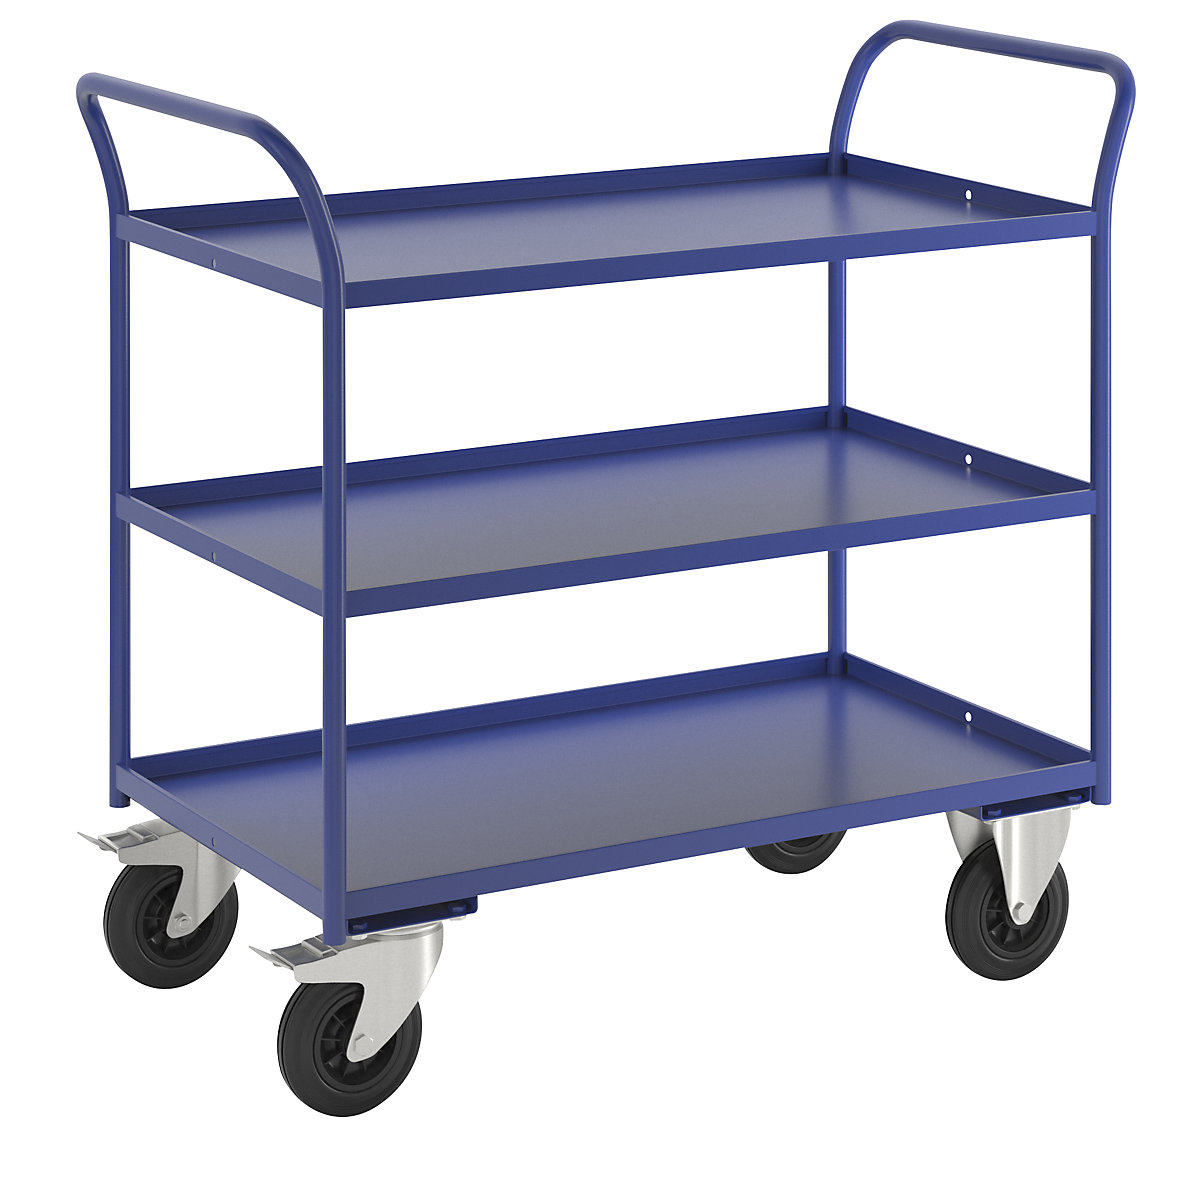 KM41 table trolley – Kongamek, 3 shelves with raised edges, LxWxH 1070 x 550 x 1000 mm, blue, 2 swivel castors with stops, 2 fixed castors-3